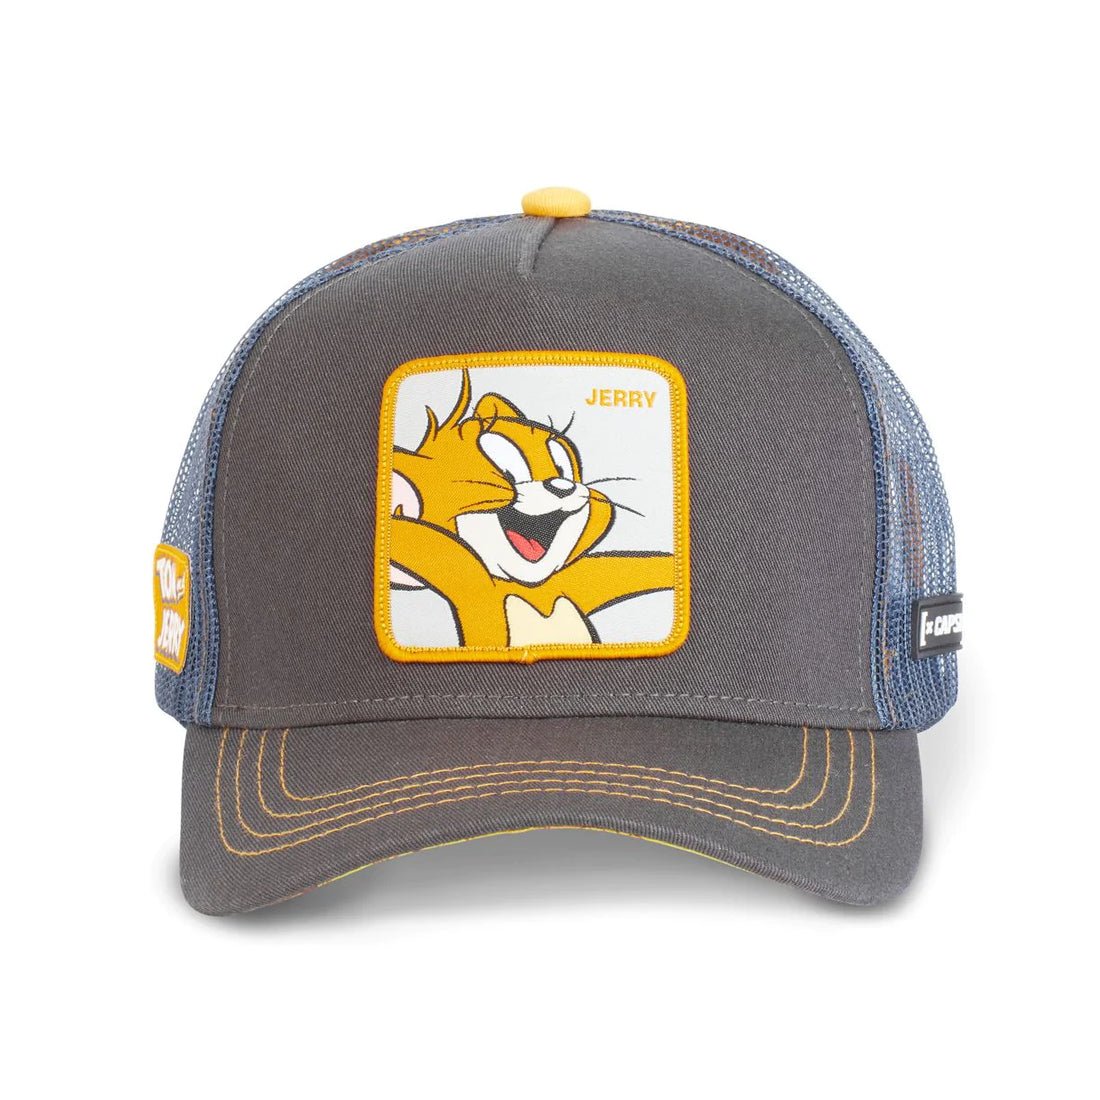 Queue Caps Happy Jerry Cap - Green - قبعة - Store 974 | ستور ٩٧٤